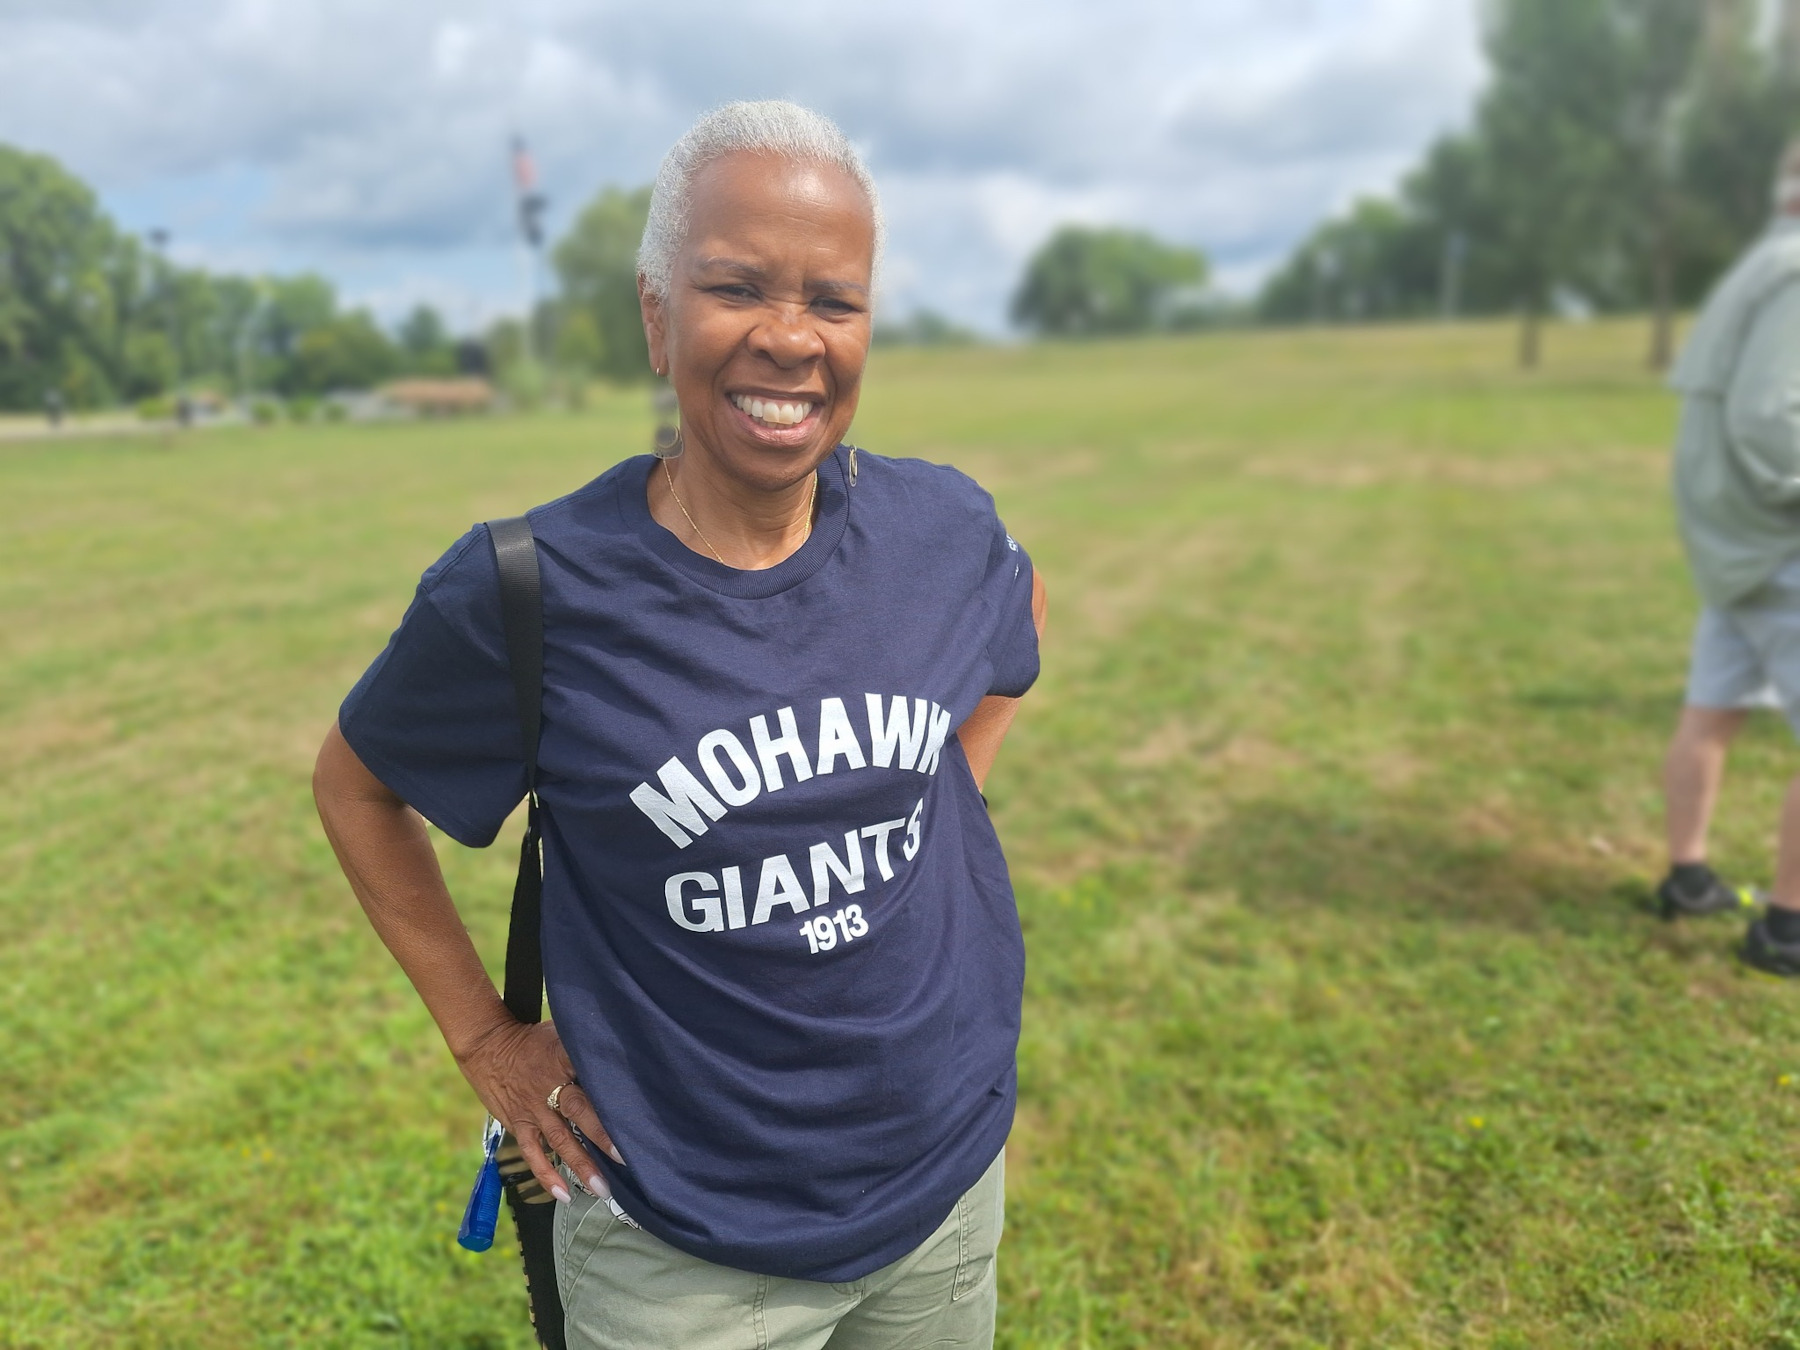 Cynthia Farmer wearing Mohawk Giants tshirt, smiling